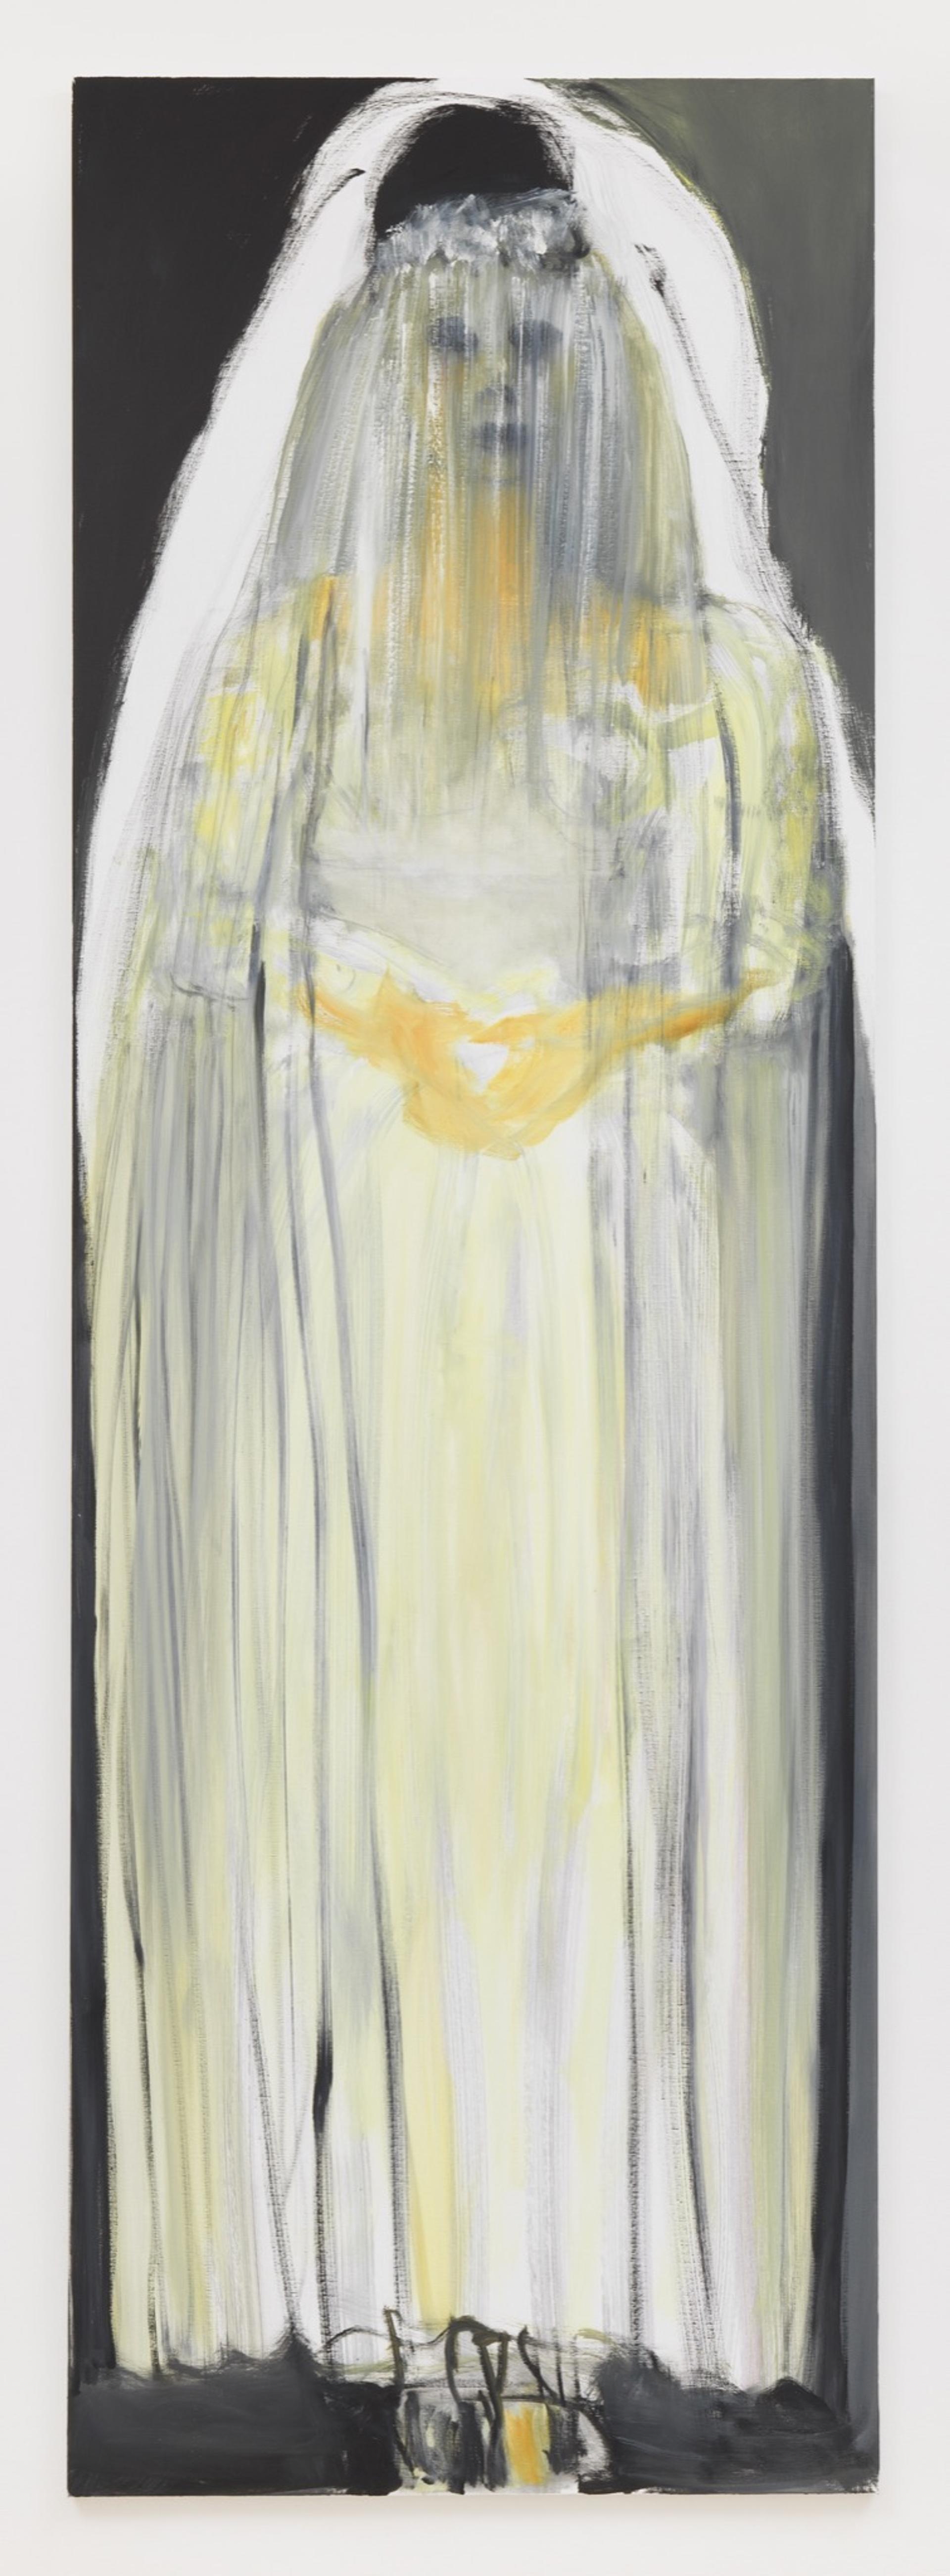 Marlene Dumas 'Bride,' 2018 Oil on canvas Image courtesy of David Zwirner